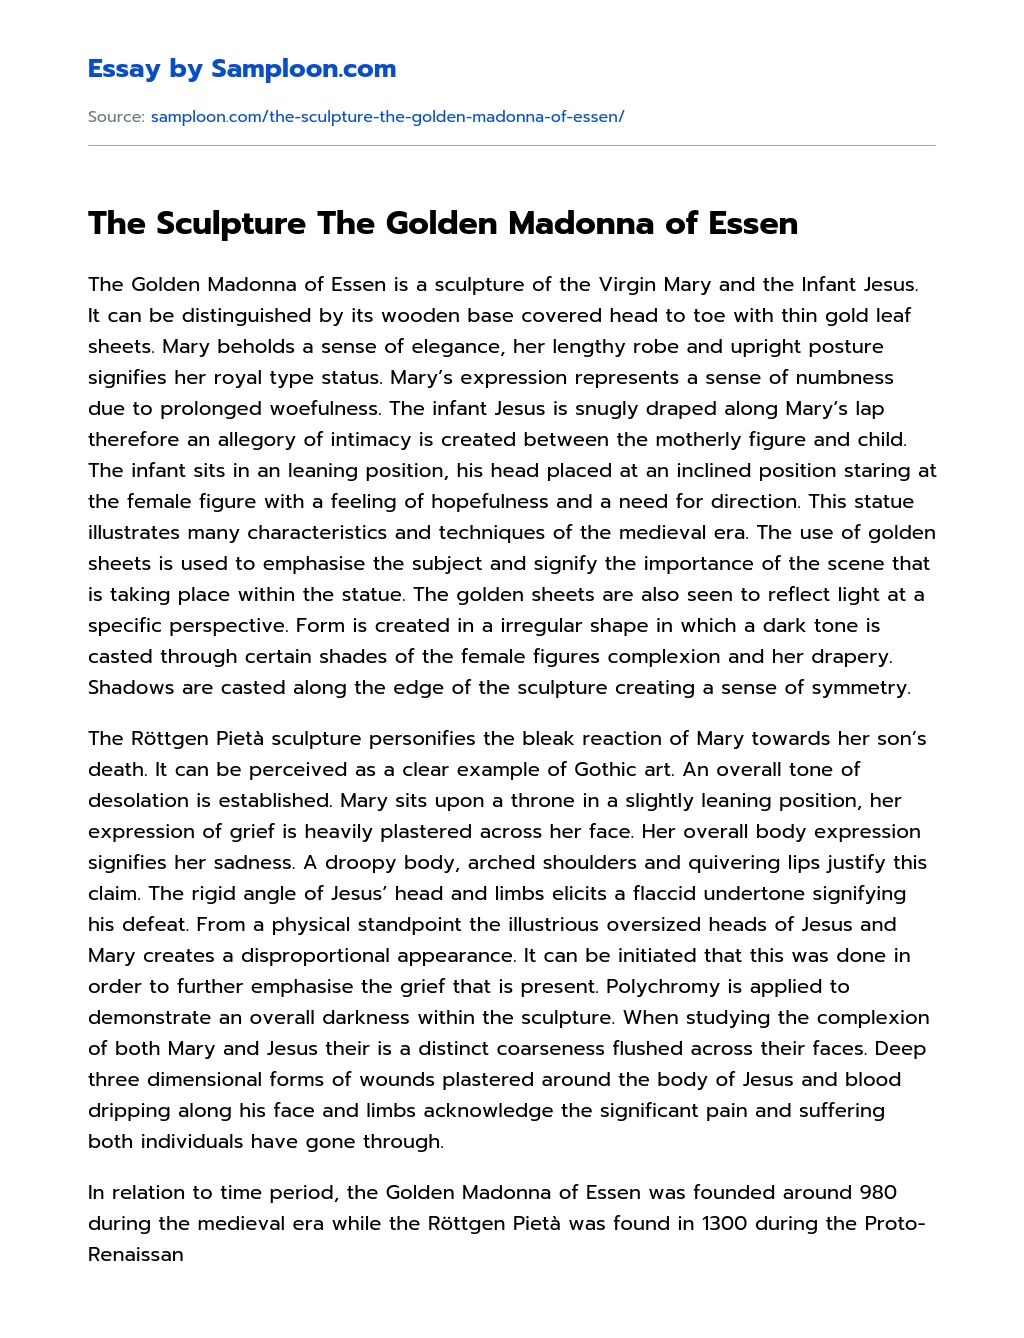 The Sculpture The Golden Madonna of Essen essay